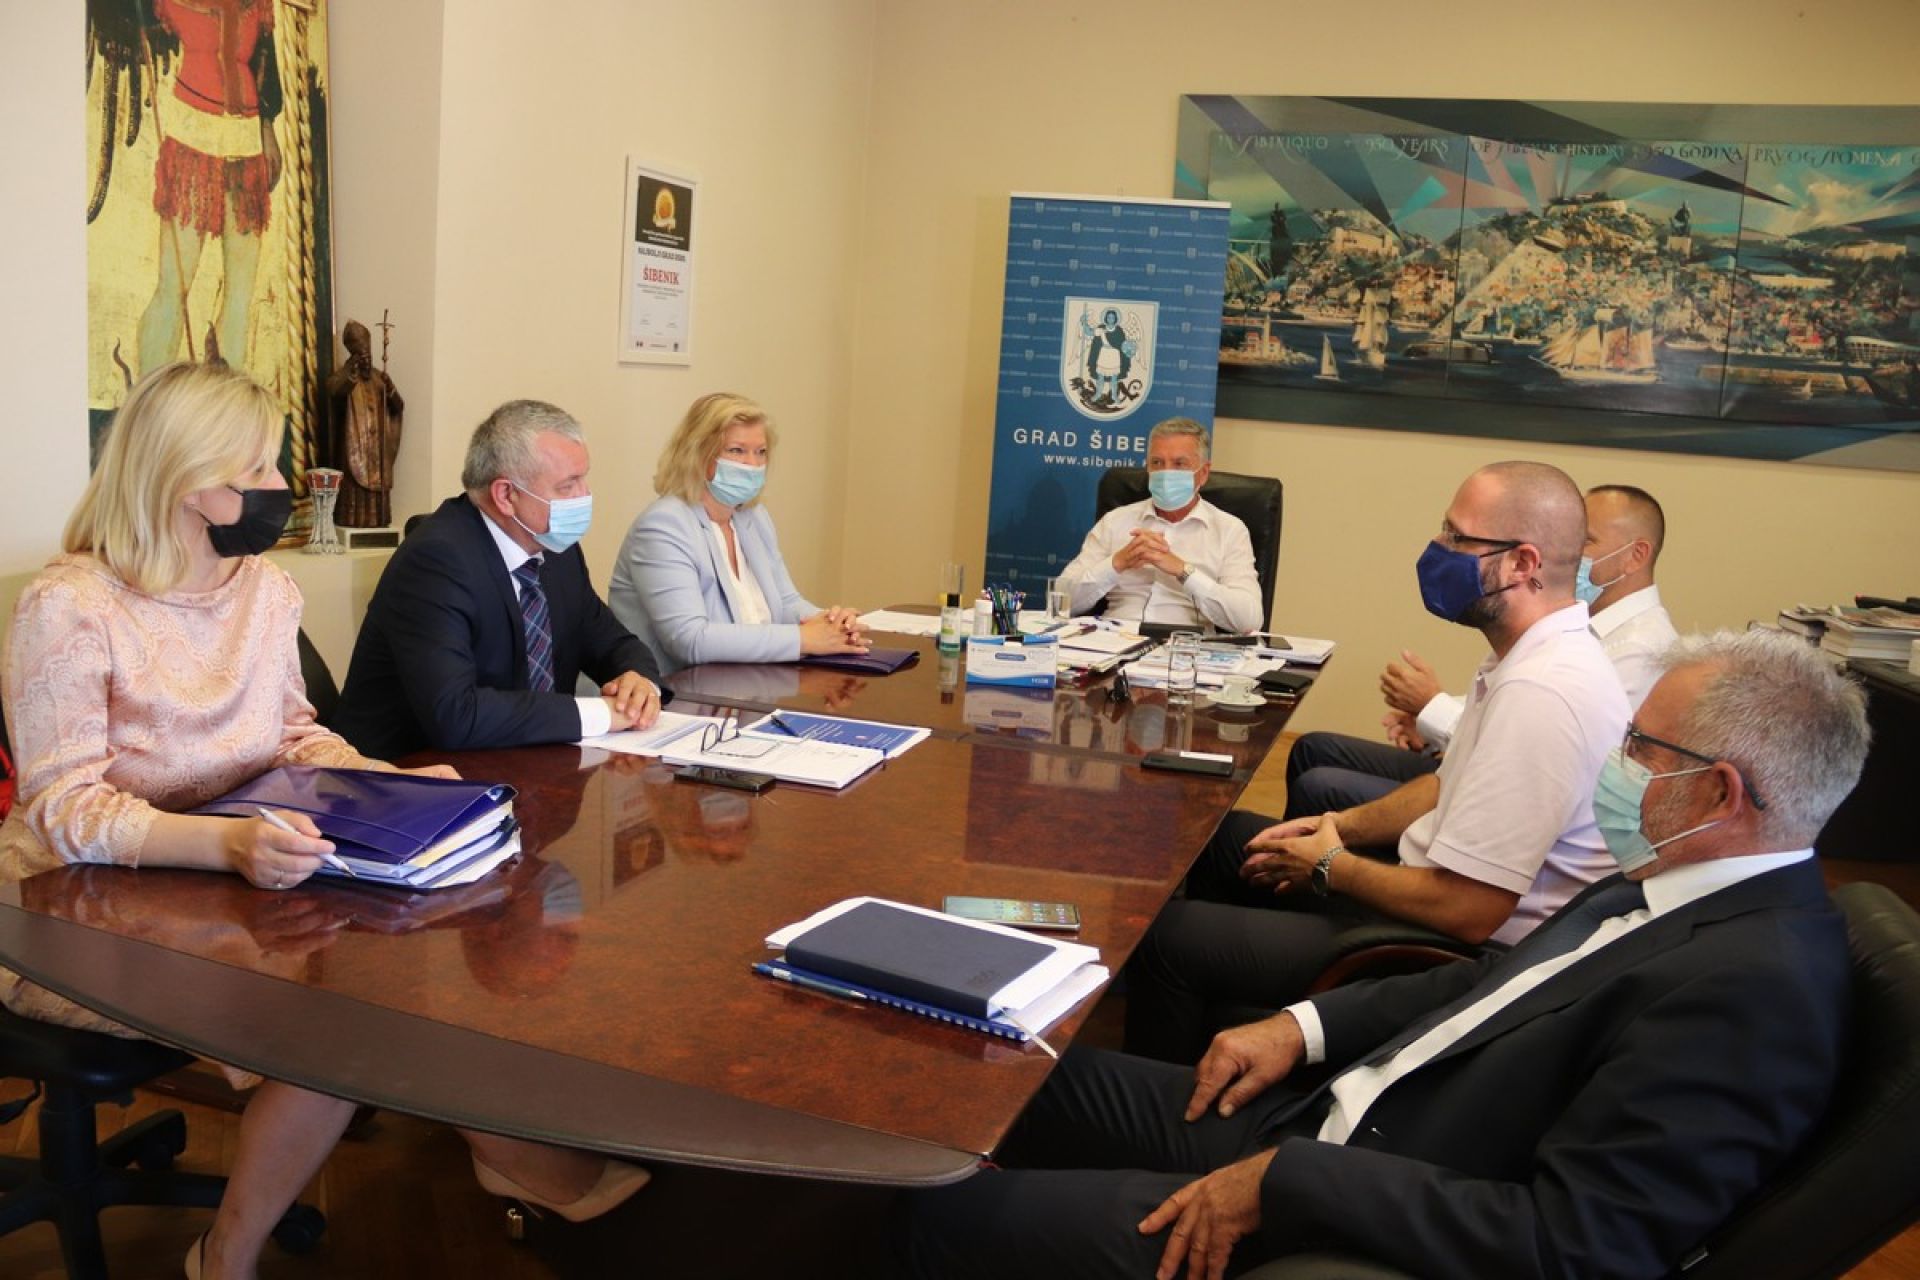  Gradonačelnik Burić i ministar Horvat održali radni sastanak na temu razvojnog projekta Batižele